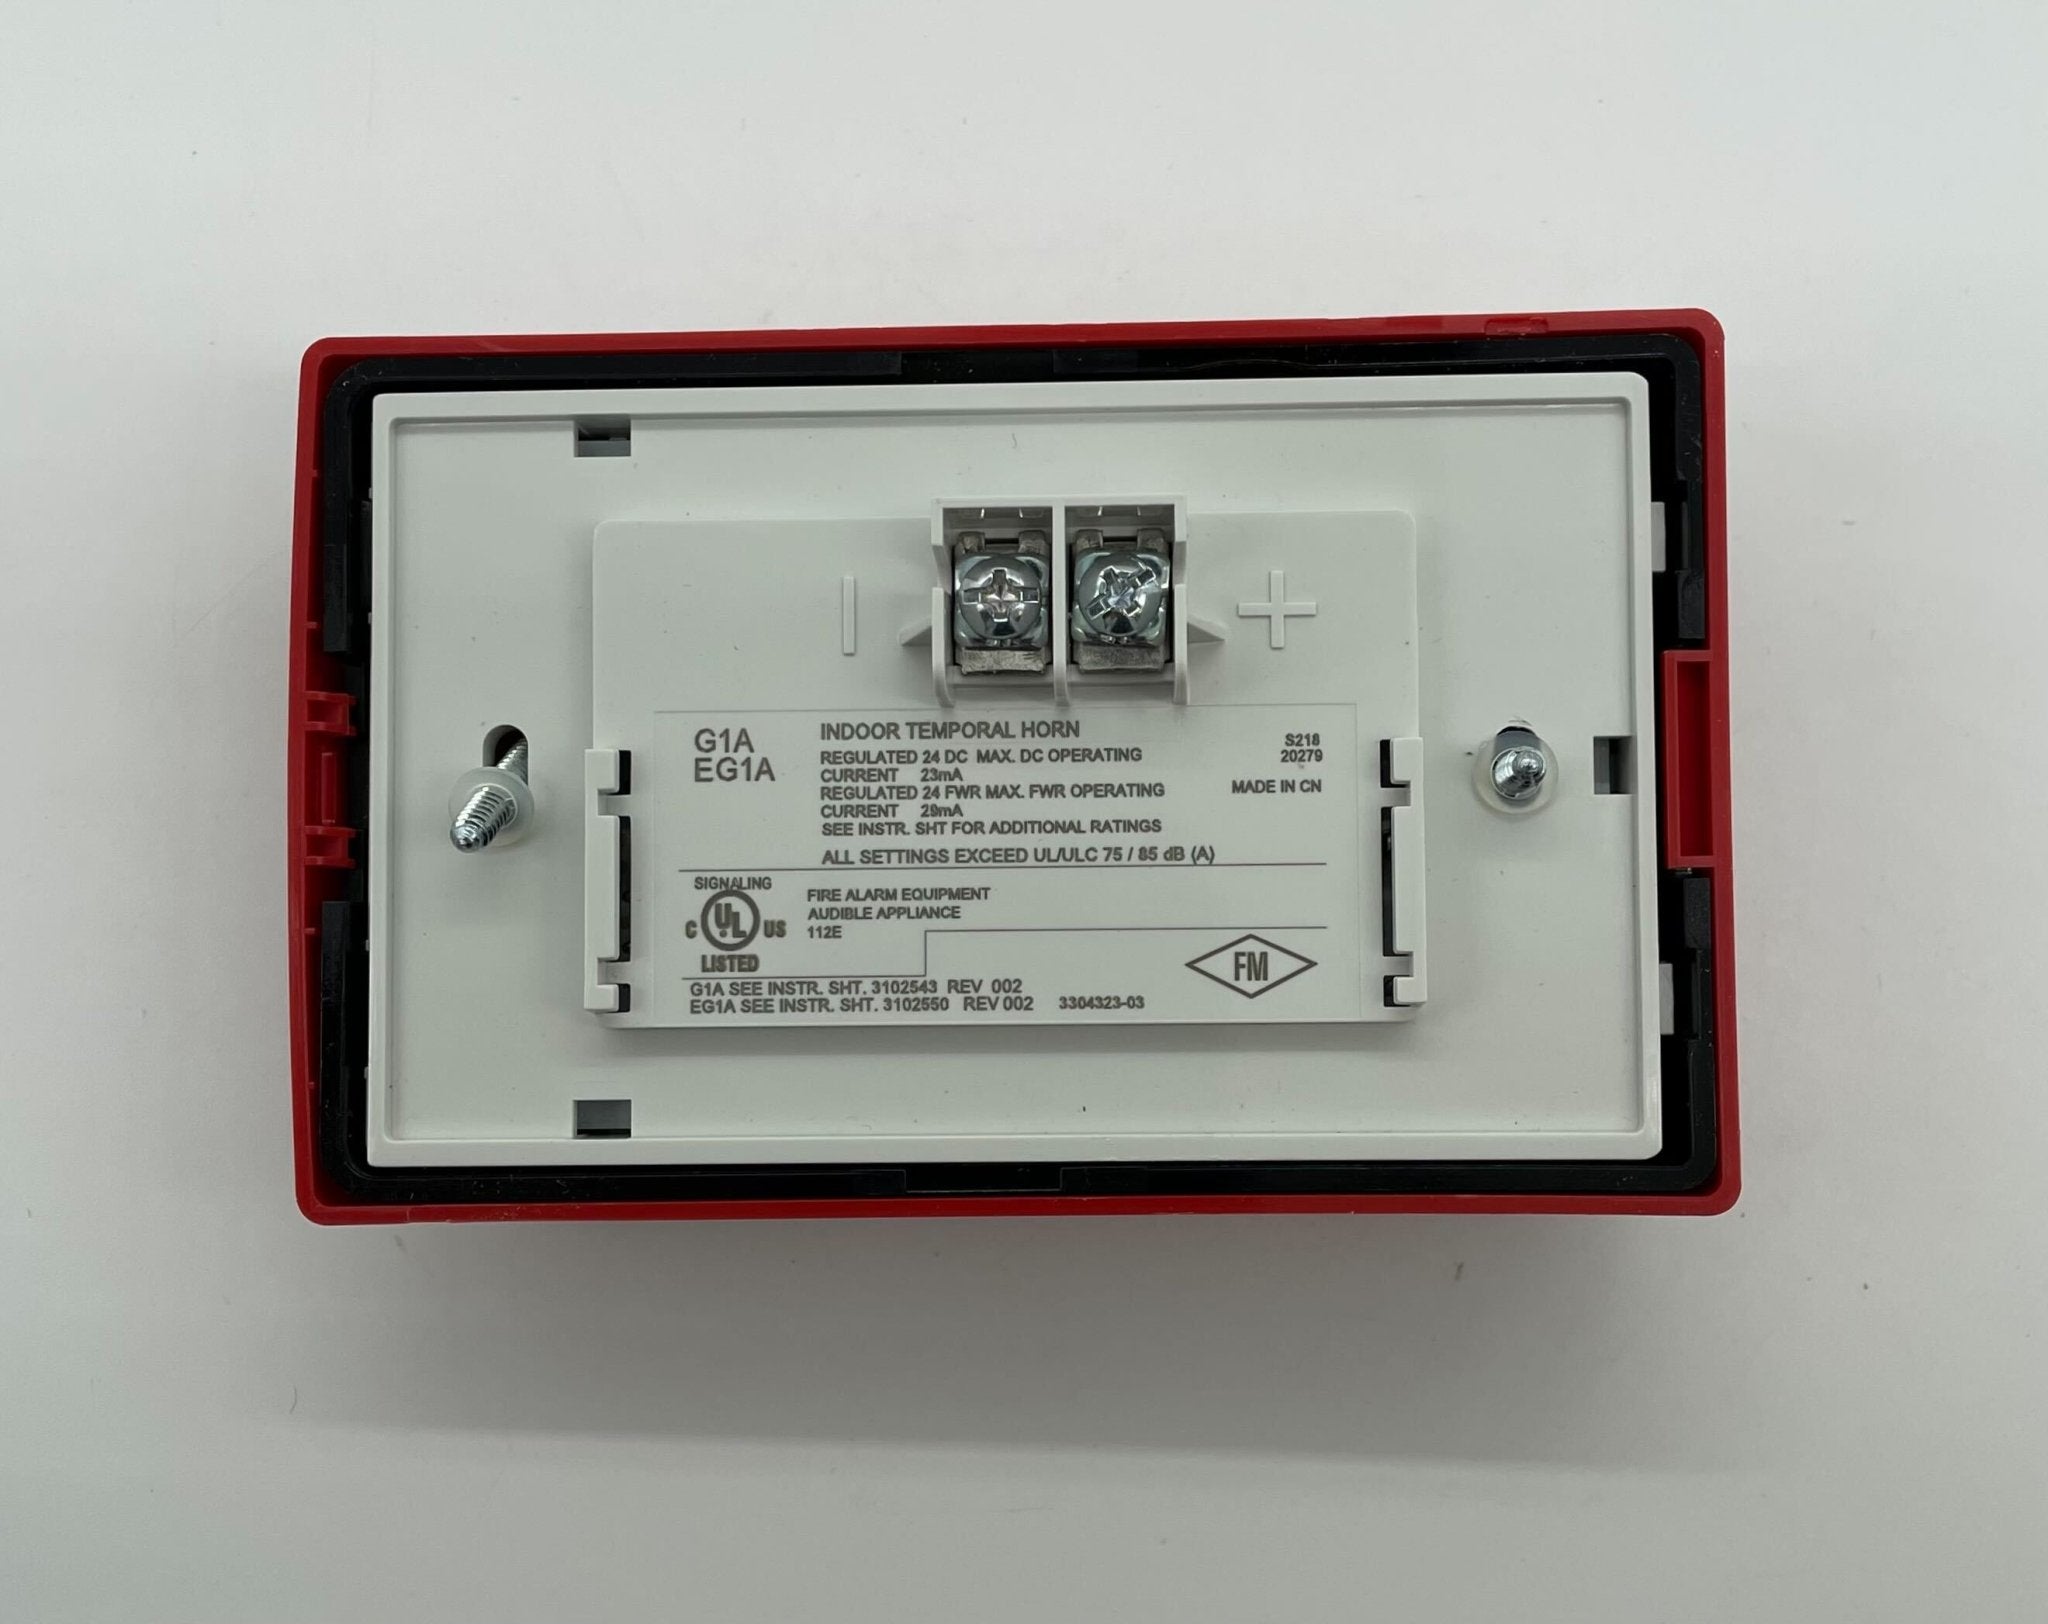 Edwards G1ARN - The Fire Alarm Supplier